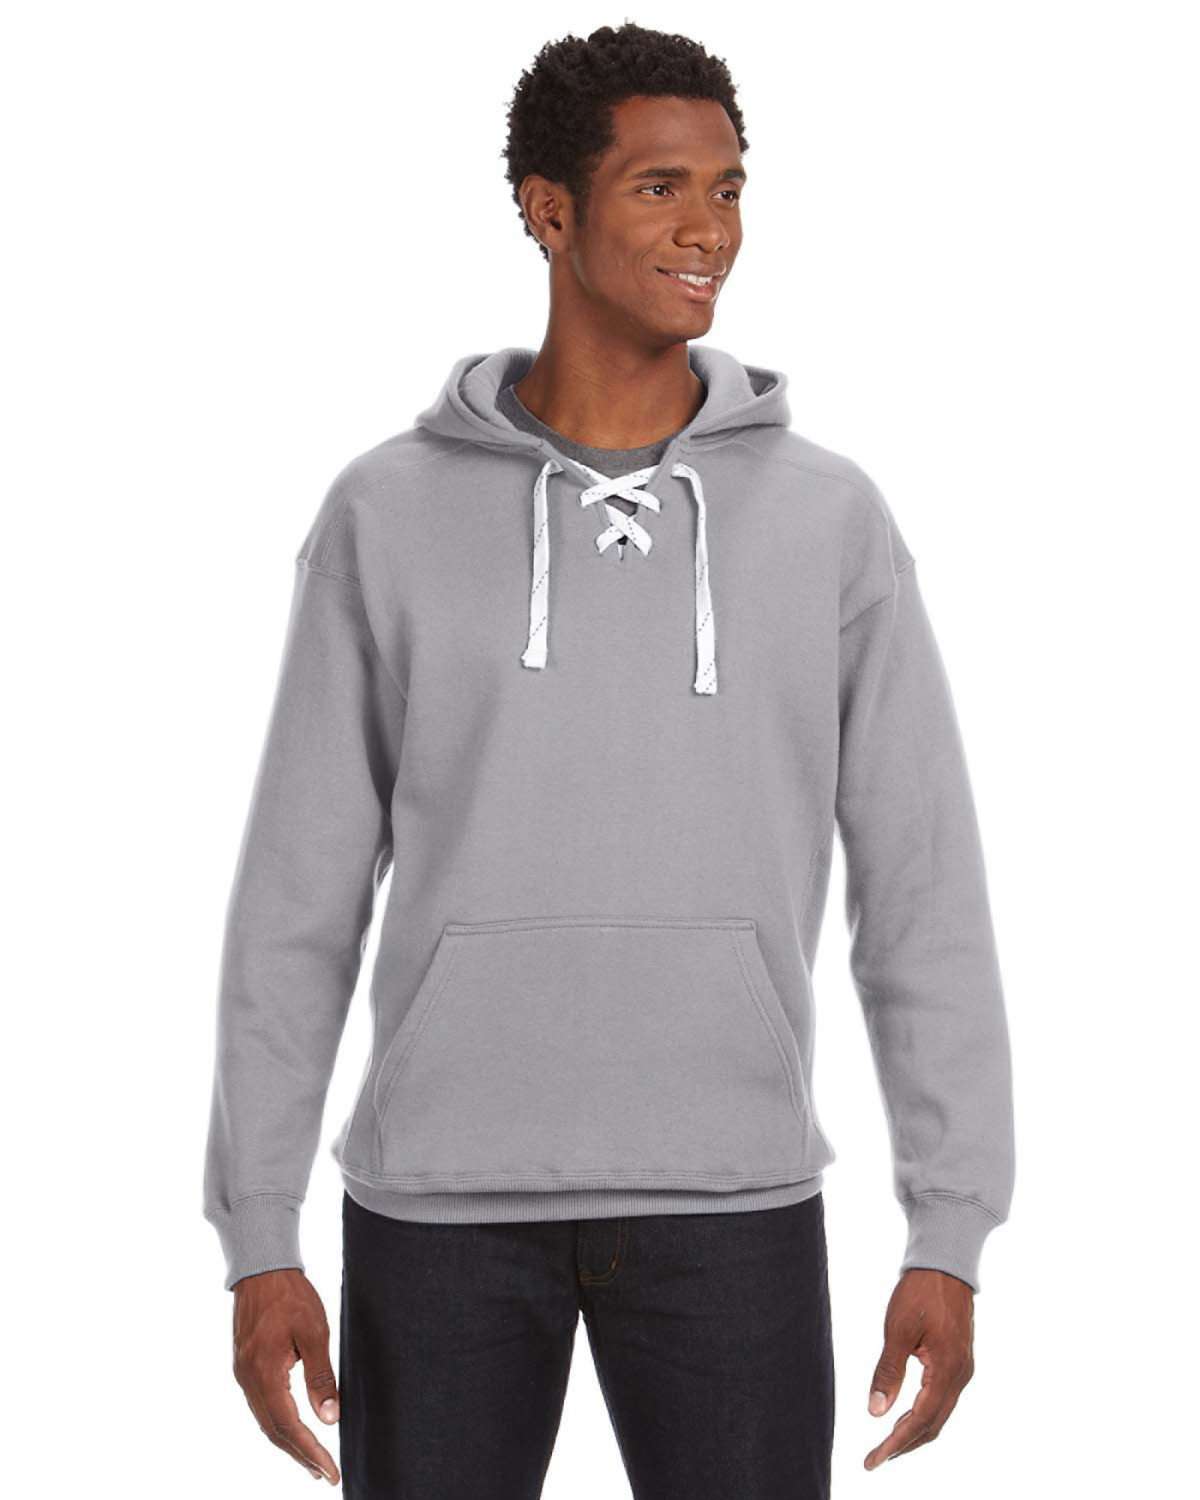 Sweatshirt Hooded Hockey Style Sweatshirt - J America - Style JA8830Fire Department Clothing